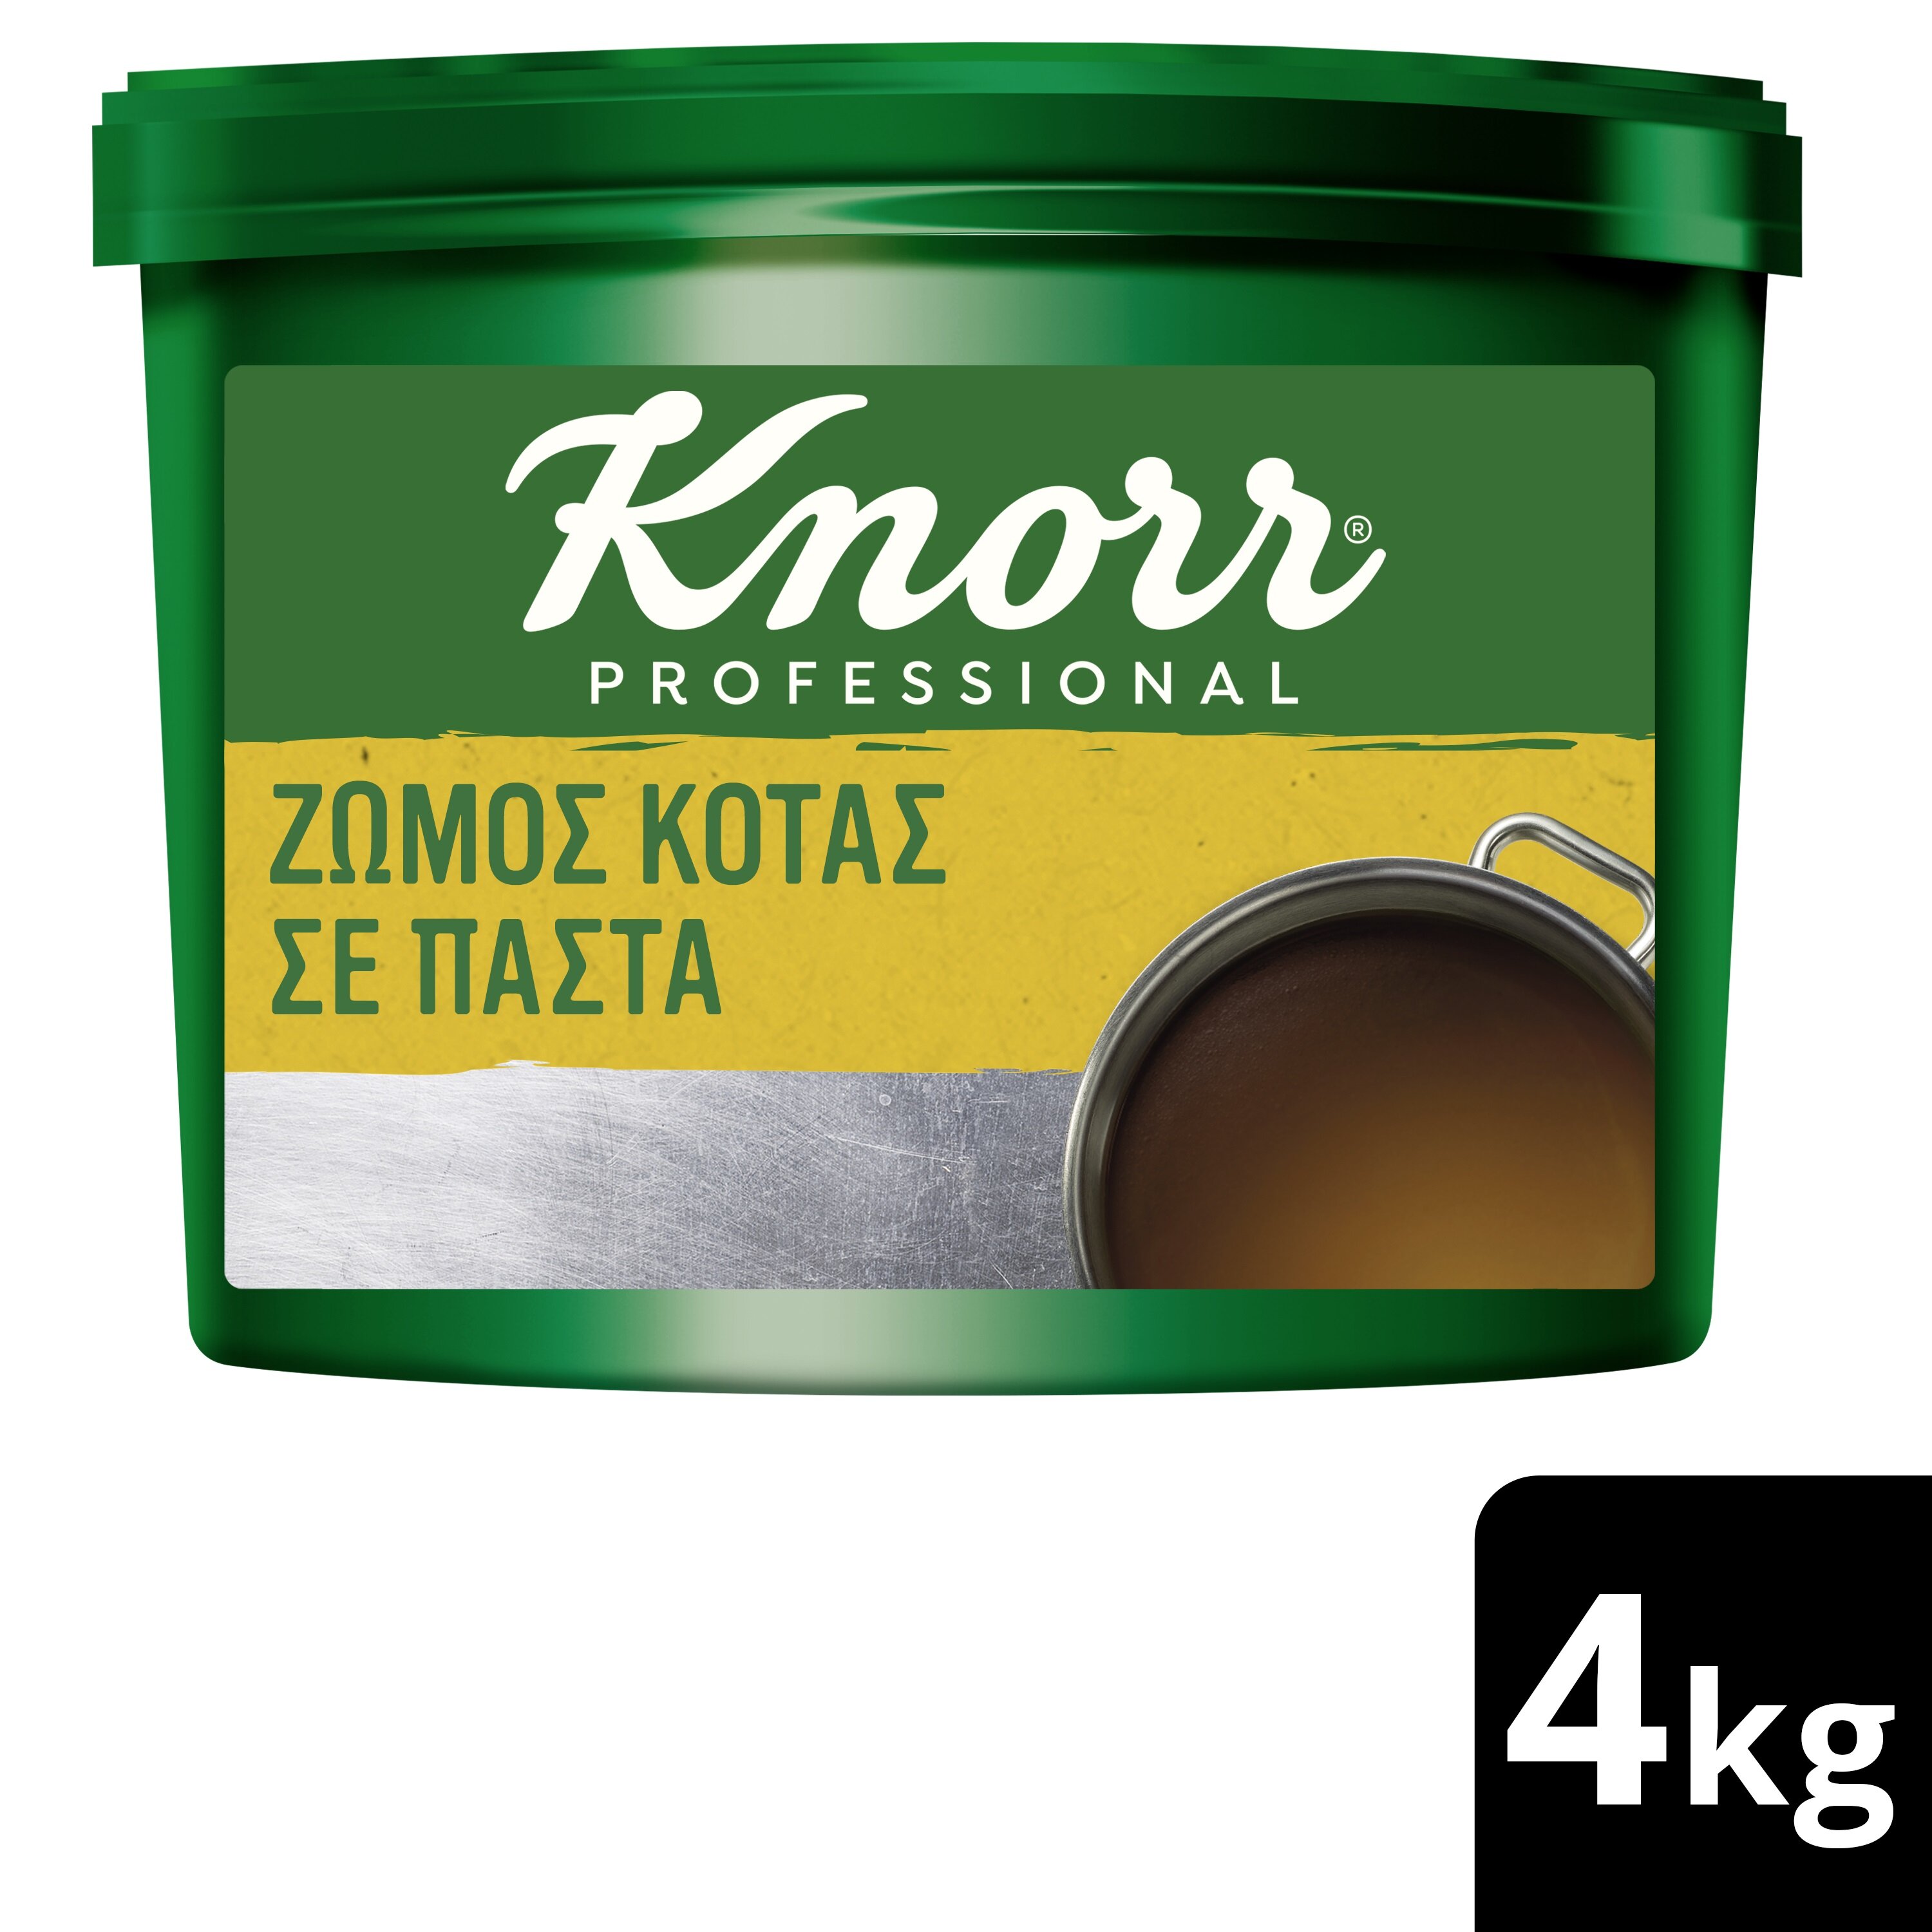 Knorr Ζωμός Κότας σε Πάστα 4 kg - 